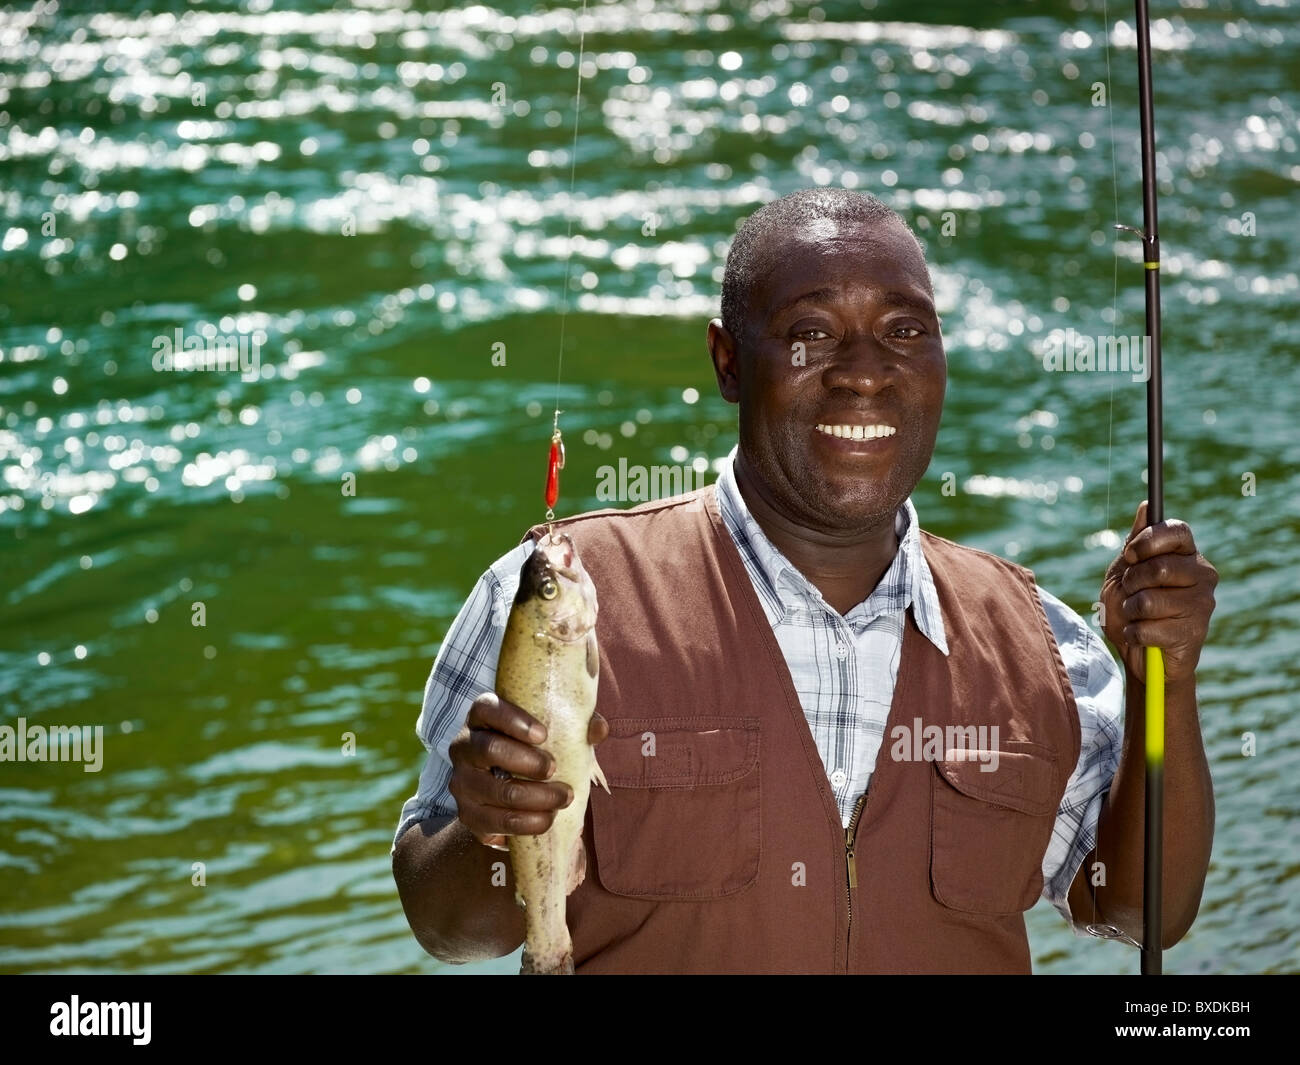 Black man holding fish and fishing rod near stream Stock Photo - Alamy